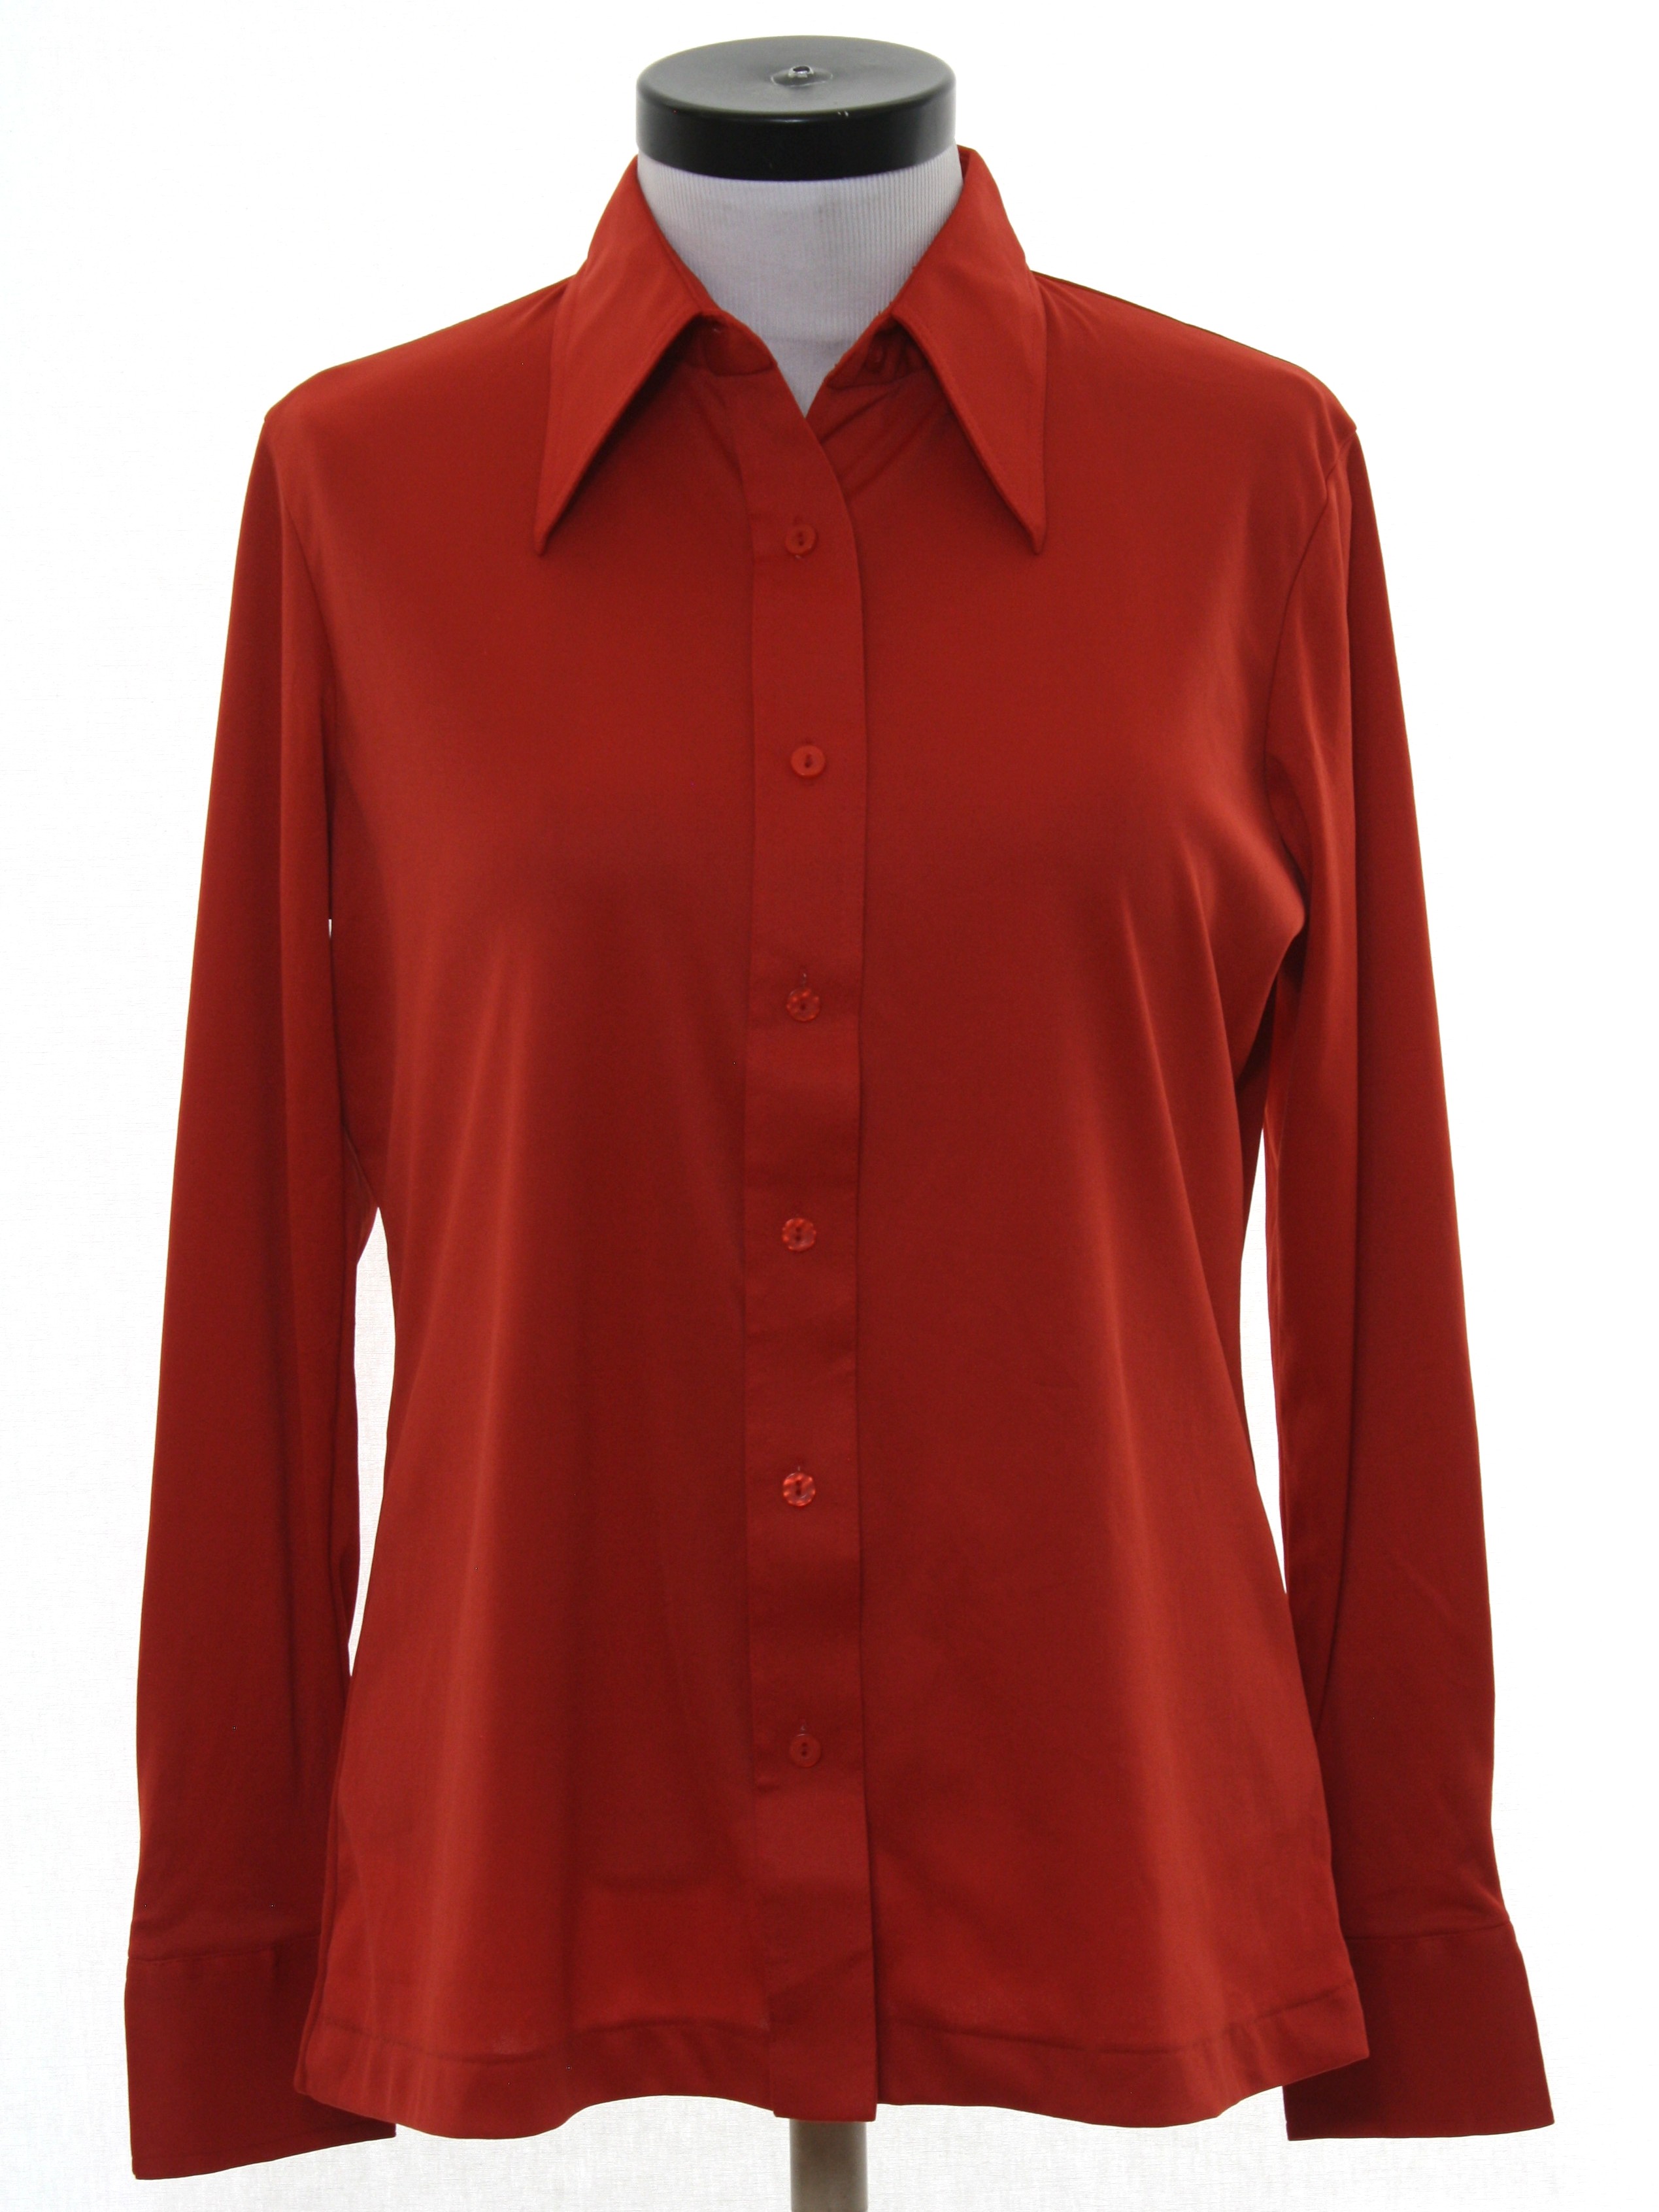 Retro 70s Disco Shirt (Russ) : 70s -Russ- Womens barn red slinky ...